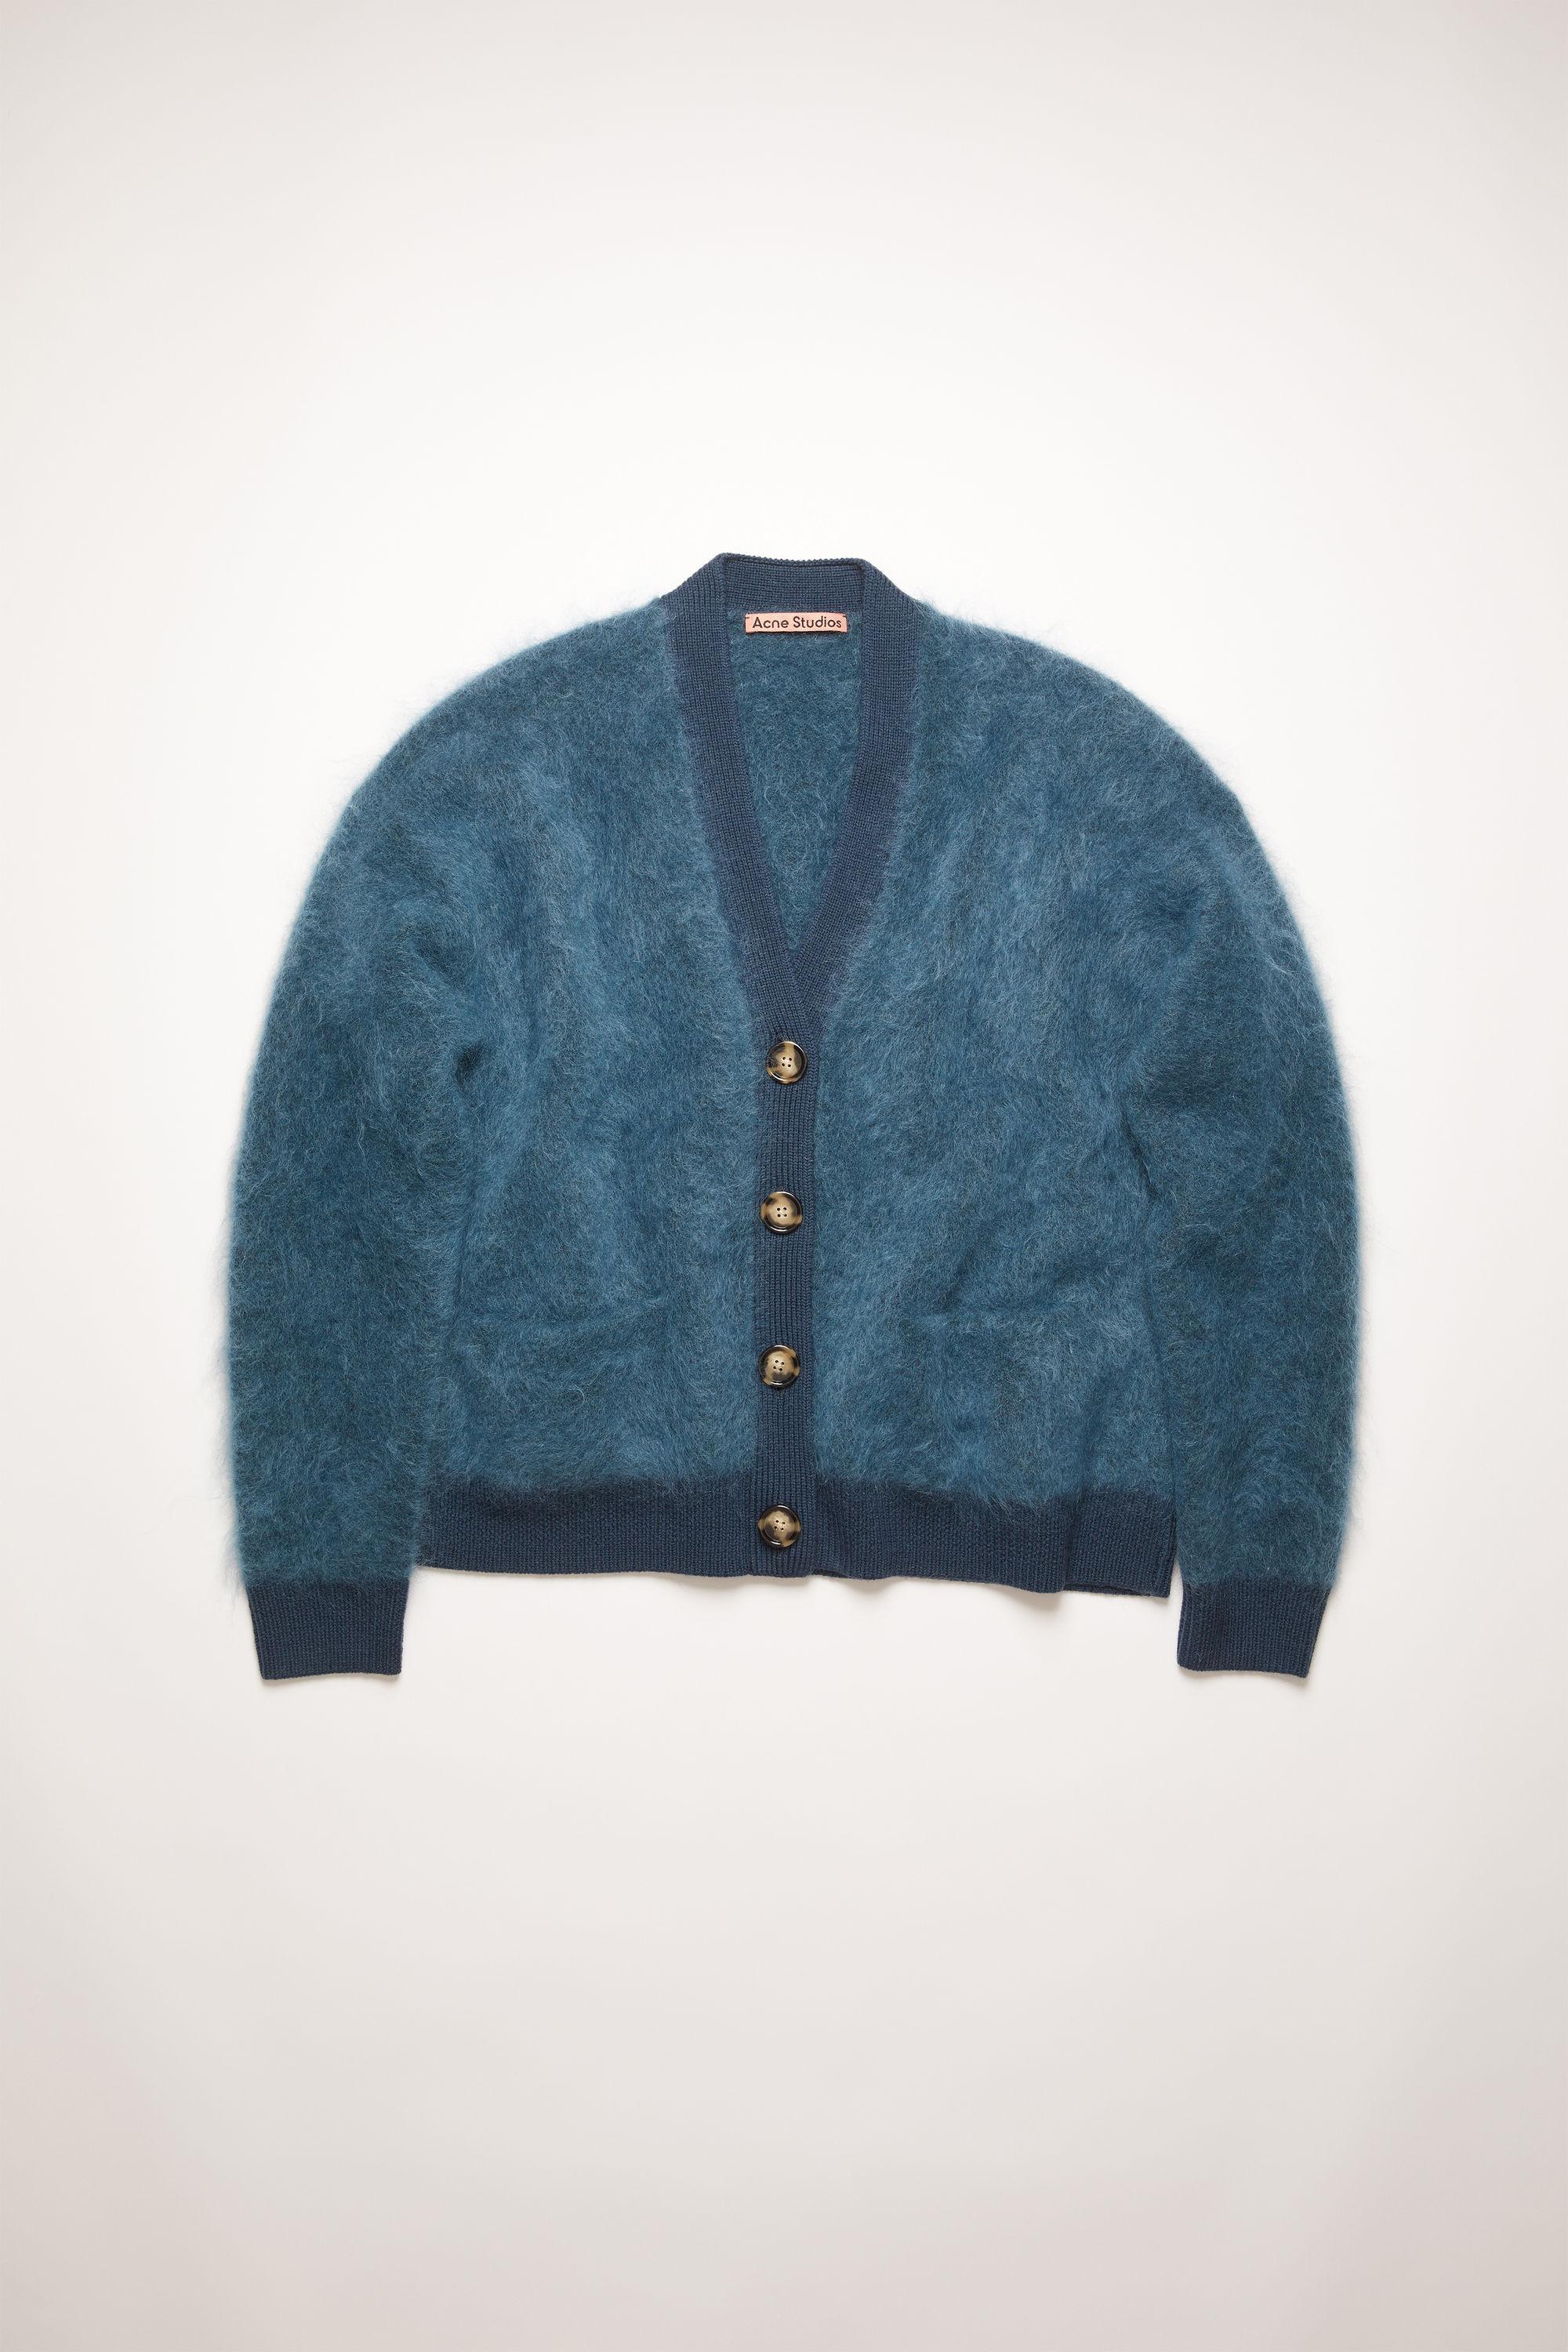 Acne Studios Wool Fn-wn-knit000297 Teal Blue Mohair-blend Cardigan - Lyst